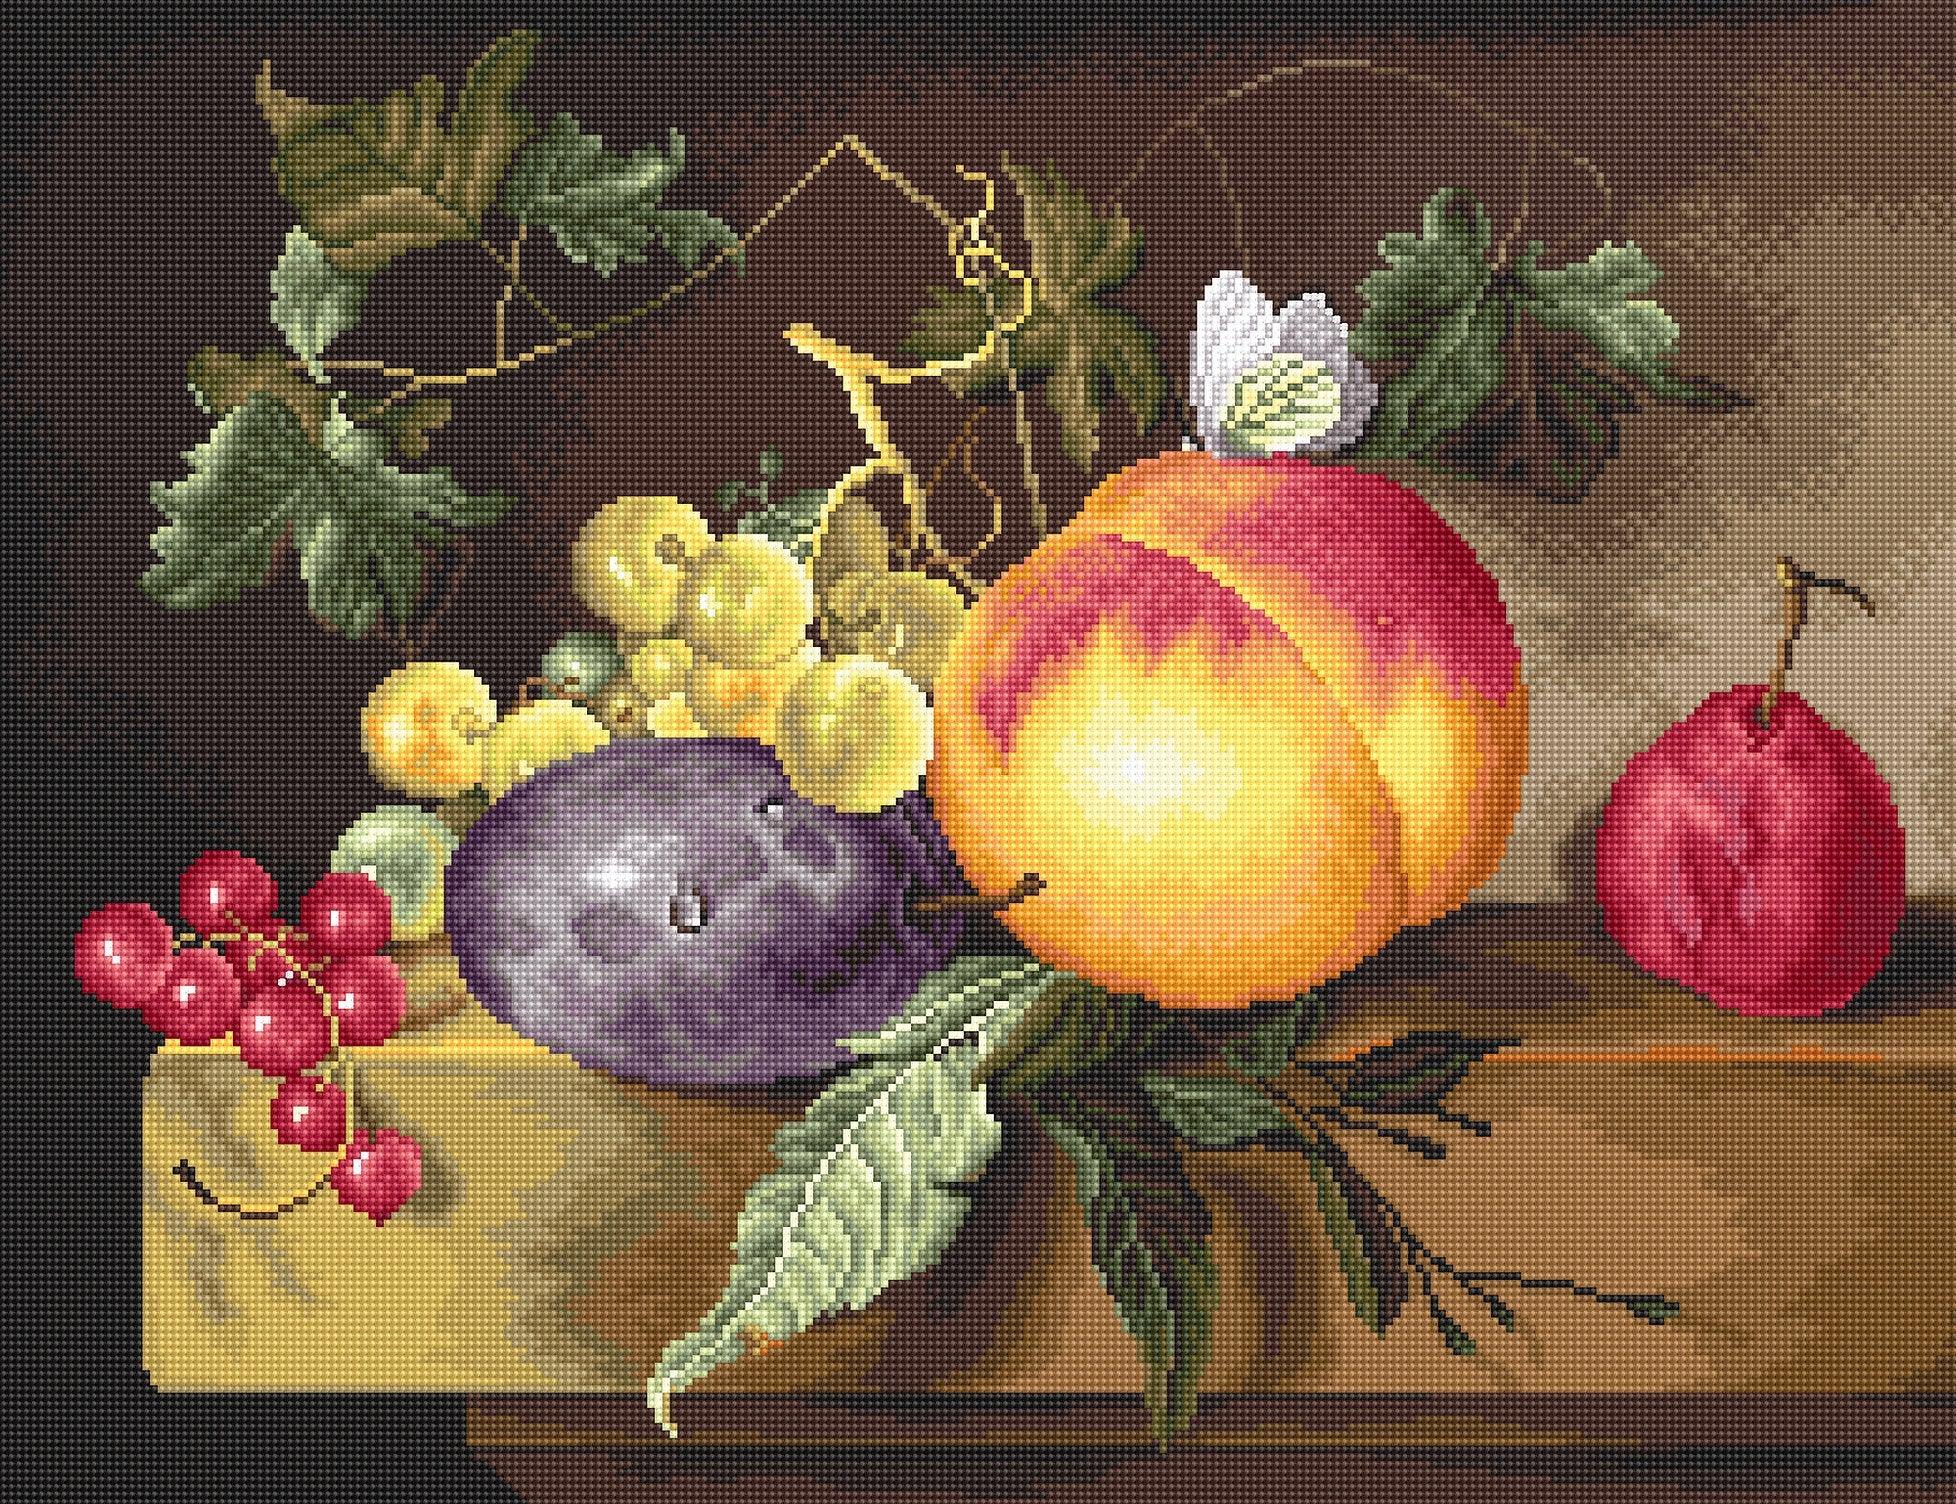 Cross Stitch Kit Luca-S - Still life with peach and grapes, B593 - Luca-S Cross Stitch Kits